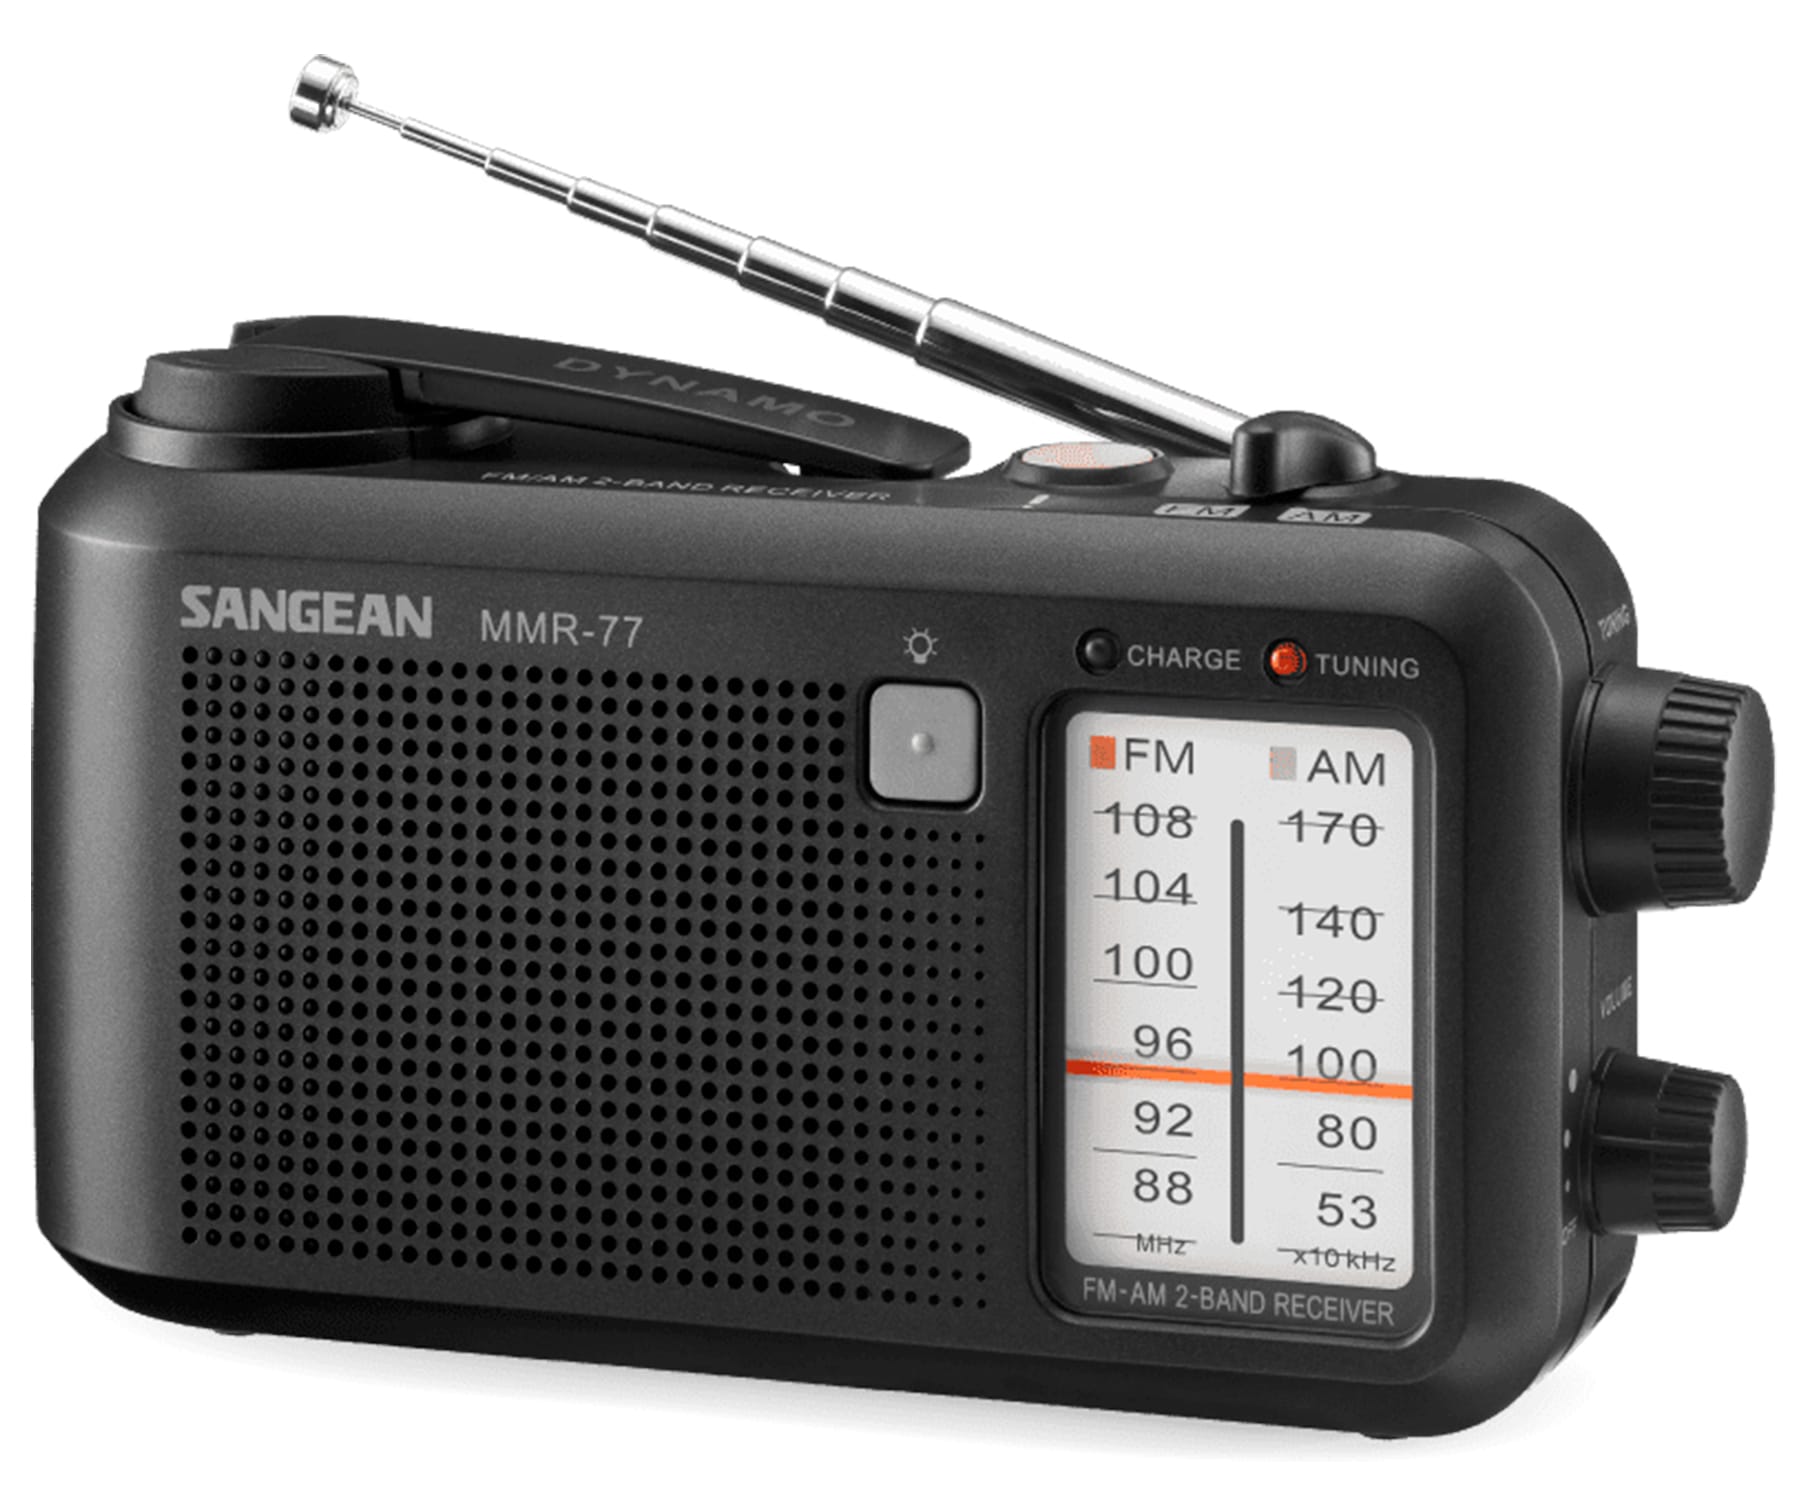 SANGEAN MMR-77 FCC MATT BLACK / RADIO PORTÁTIL